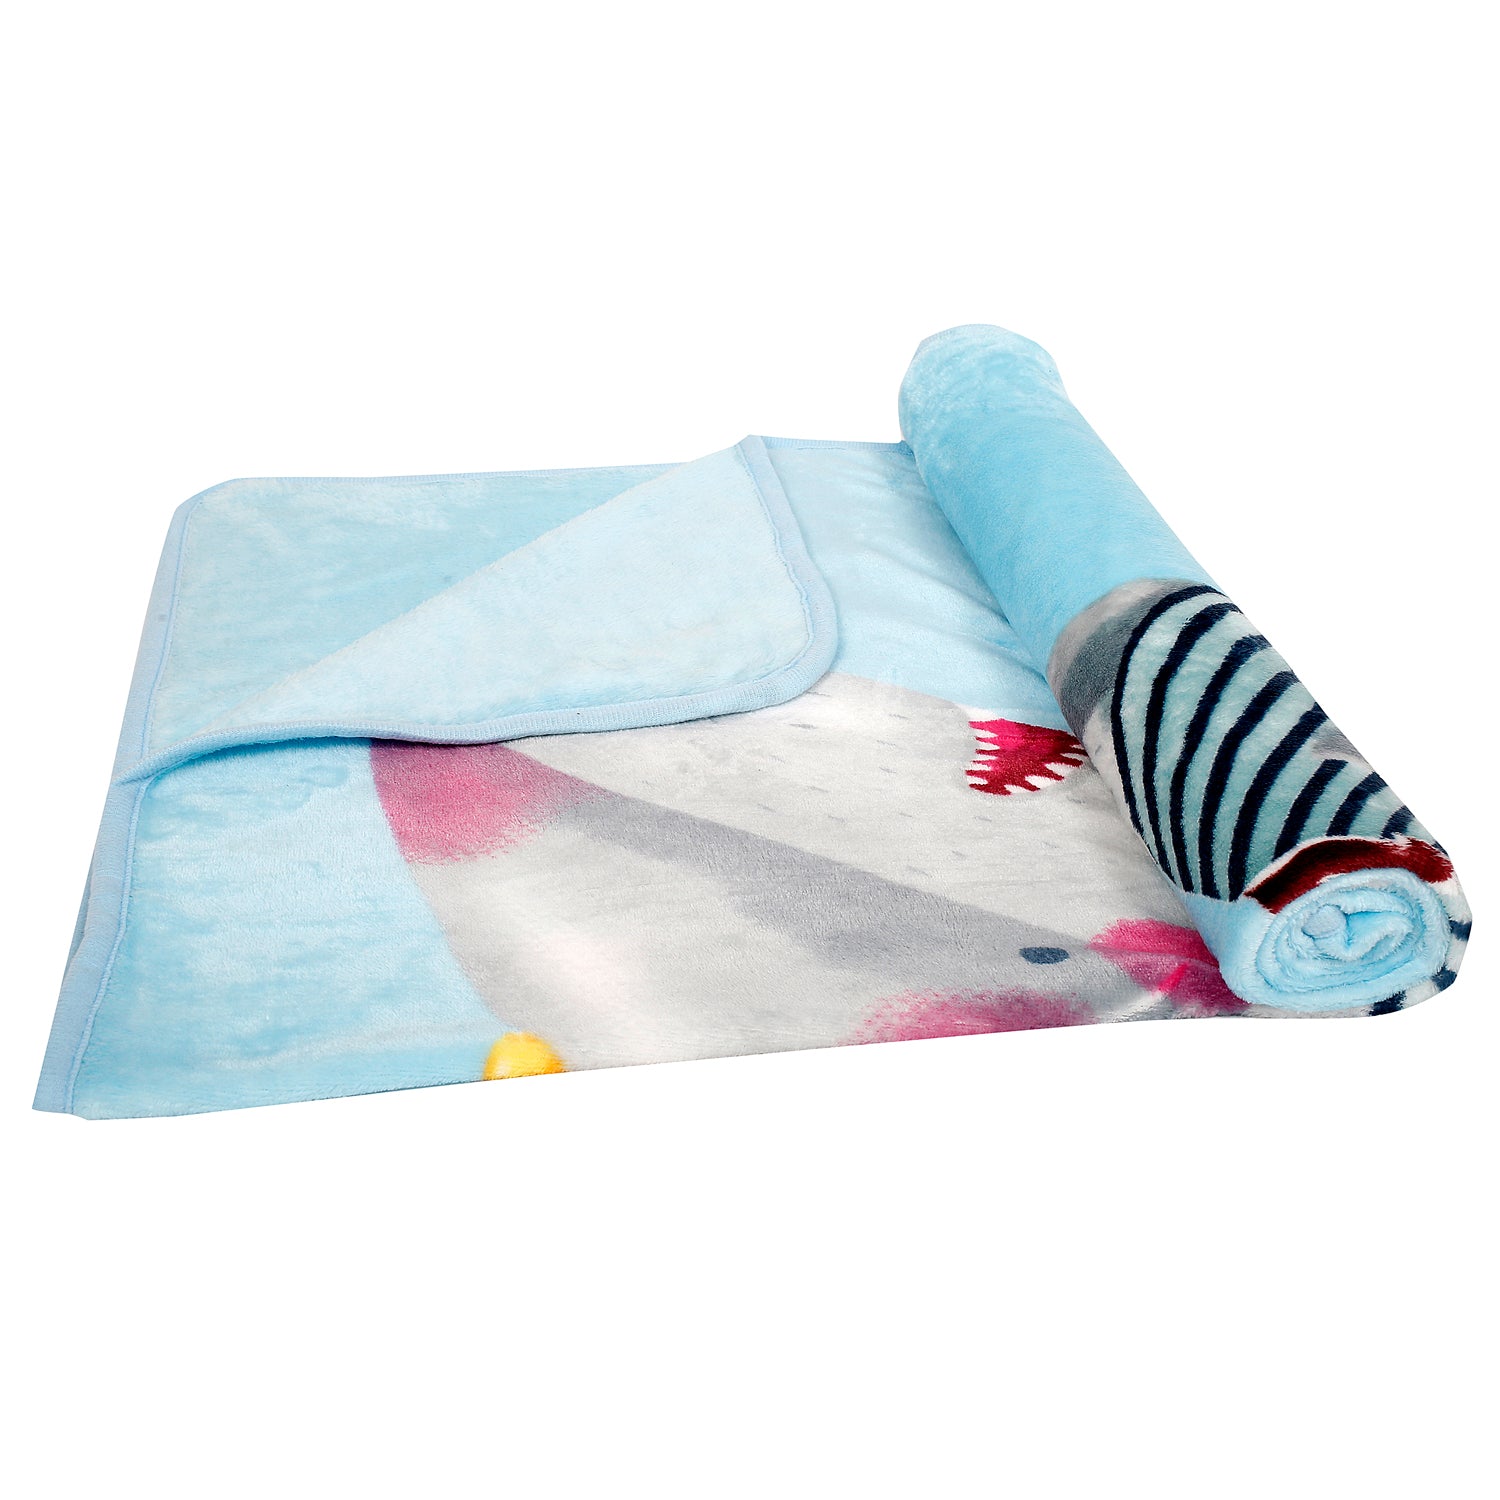 Shark Friend Blue One Ply Blanket - Baby Moo